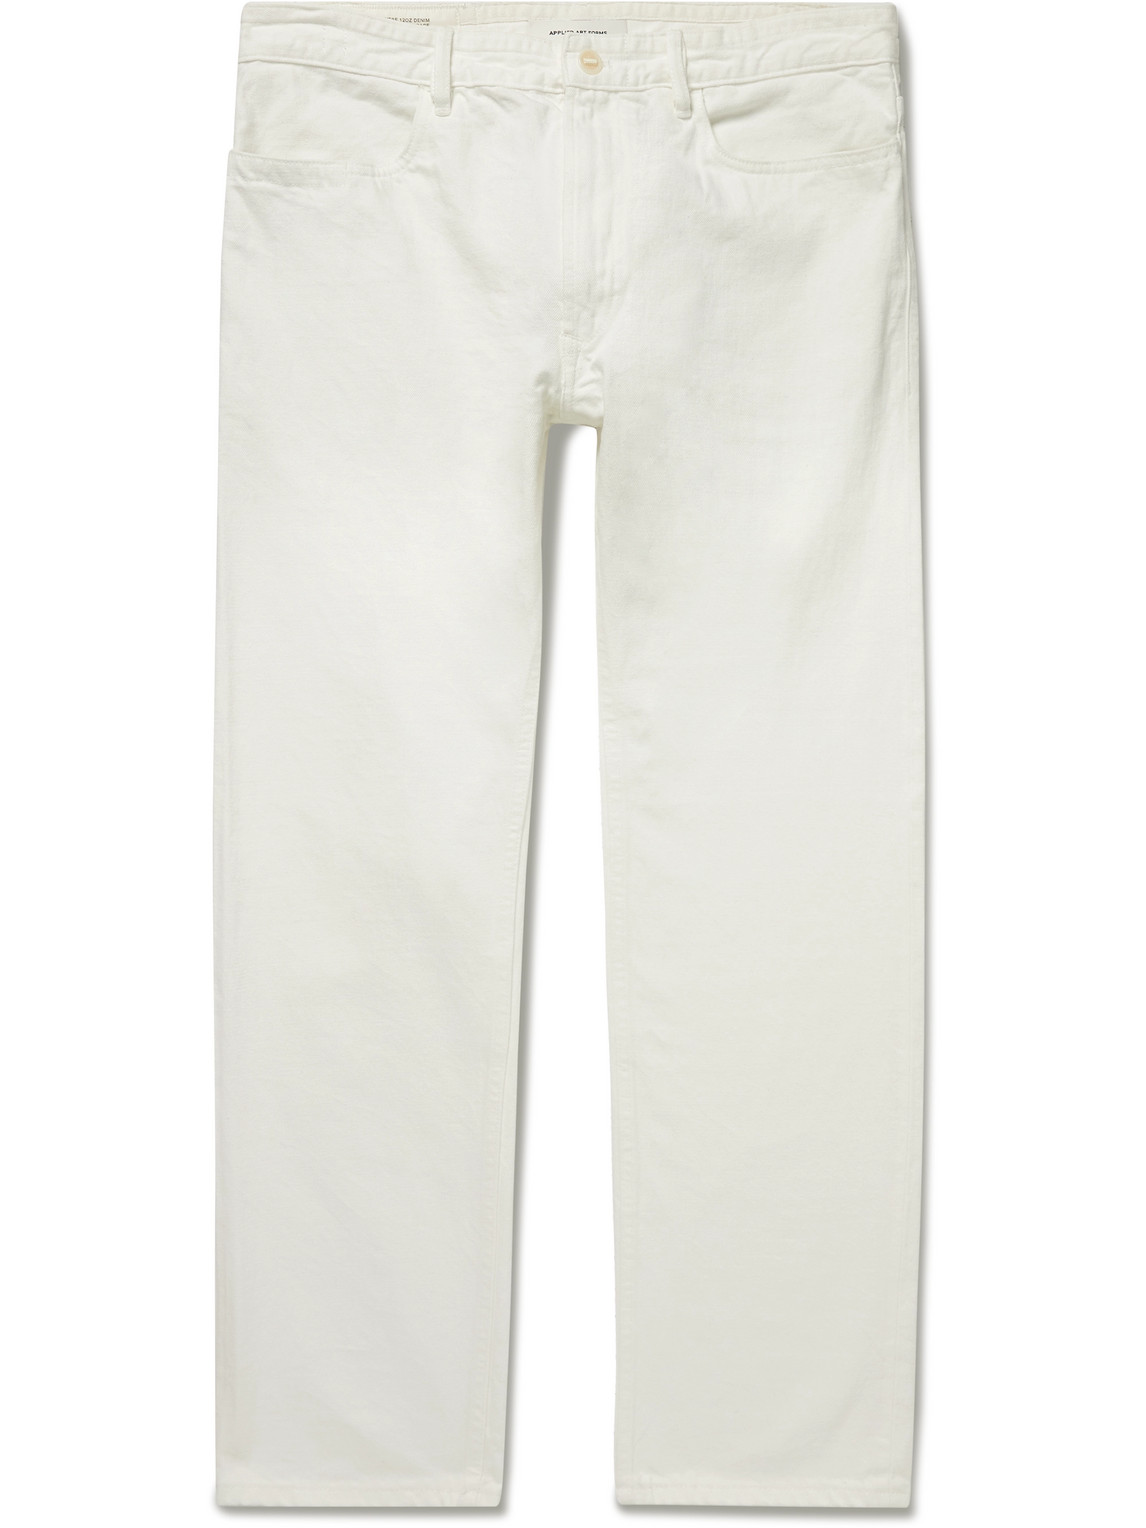 Applied Art Forms Dm2-1 Straight-leg Selvedge Jeans In White